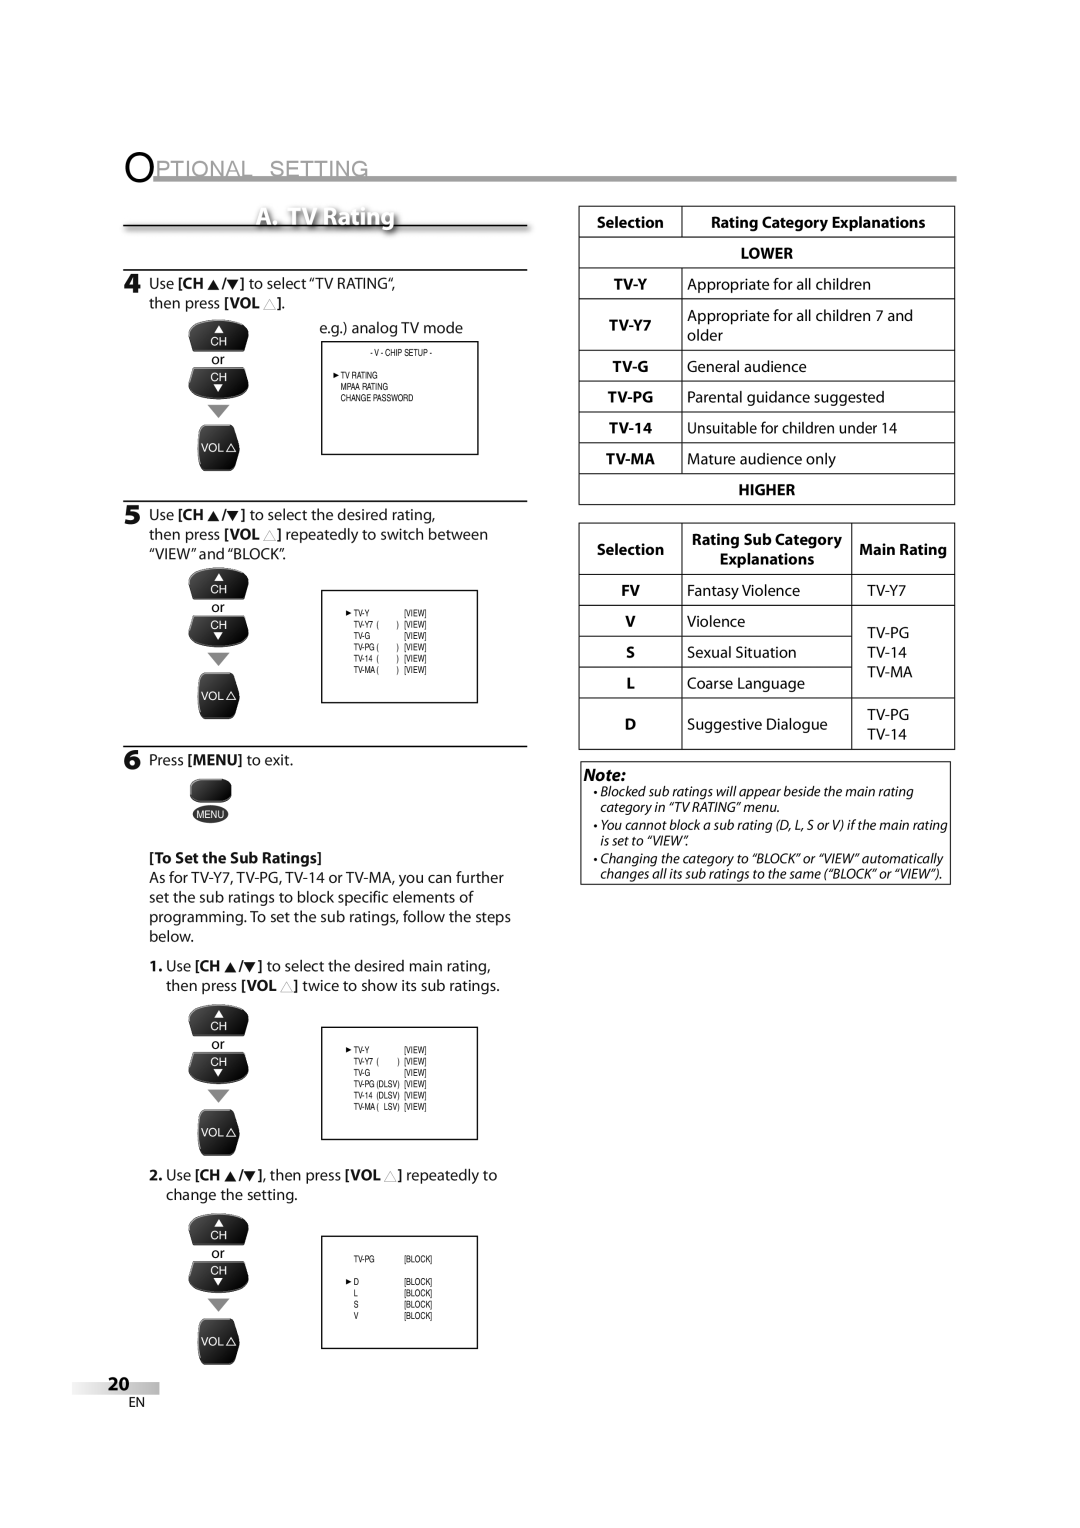 Sylvania CR202SL8 owner manual A. TV Rating, Optional Setting, Selection, Rating Category Explanations, Main Rating 